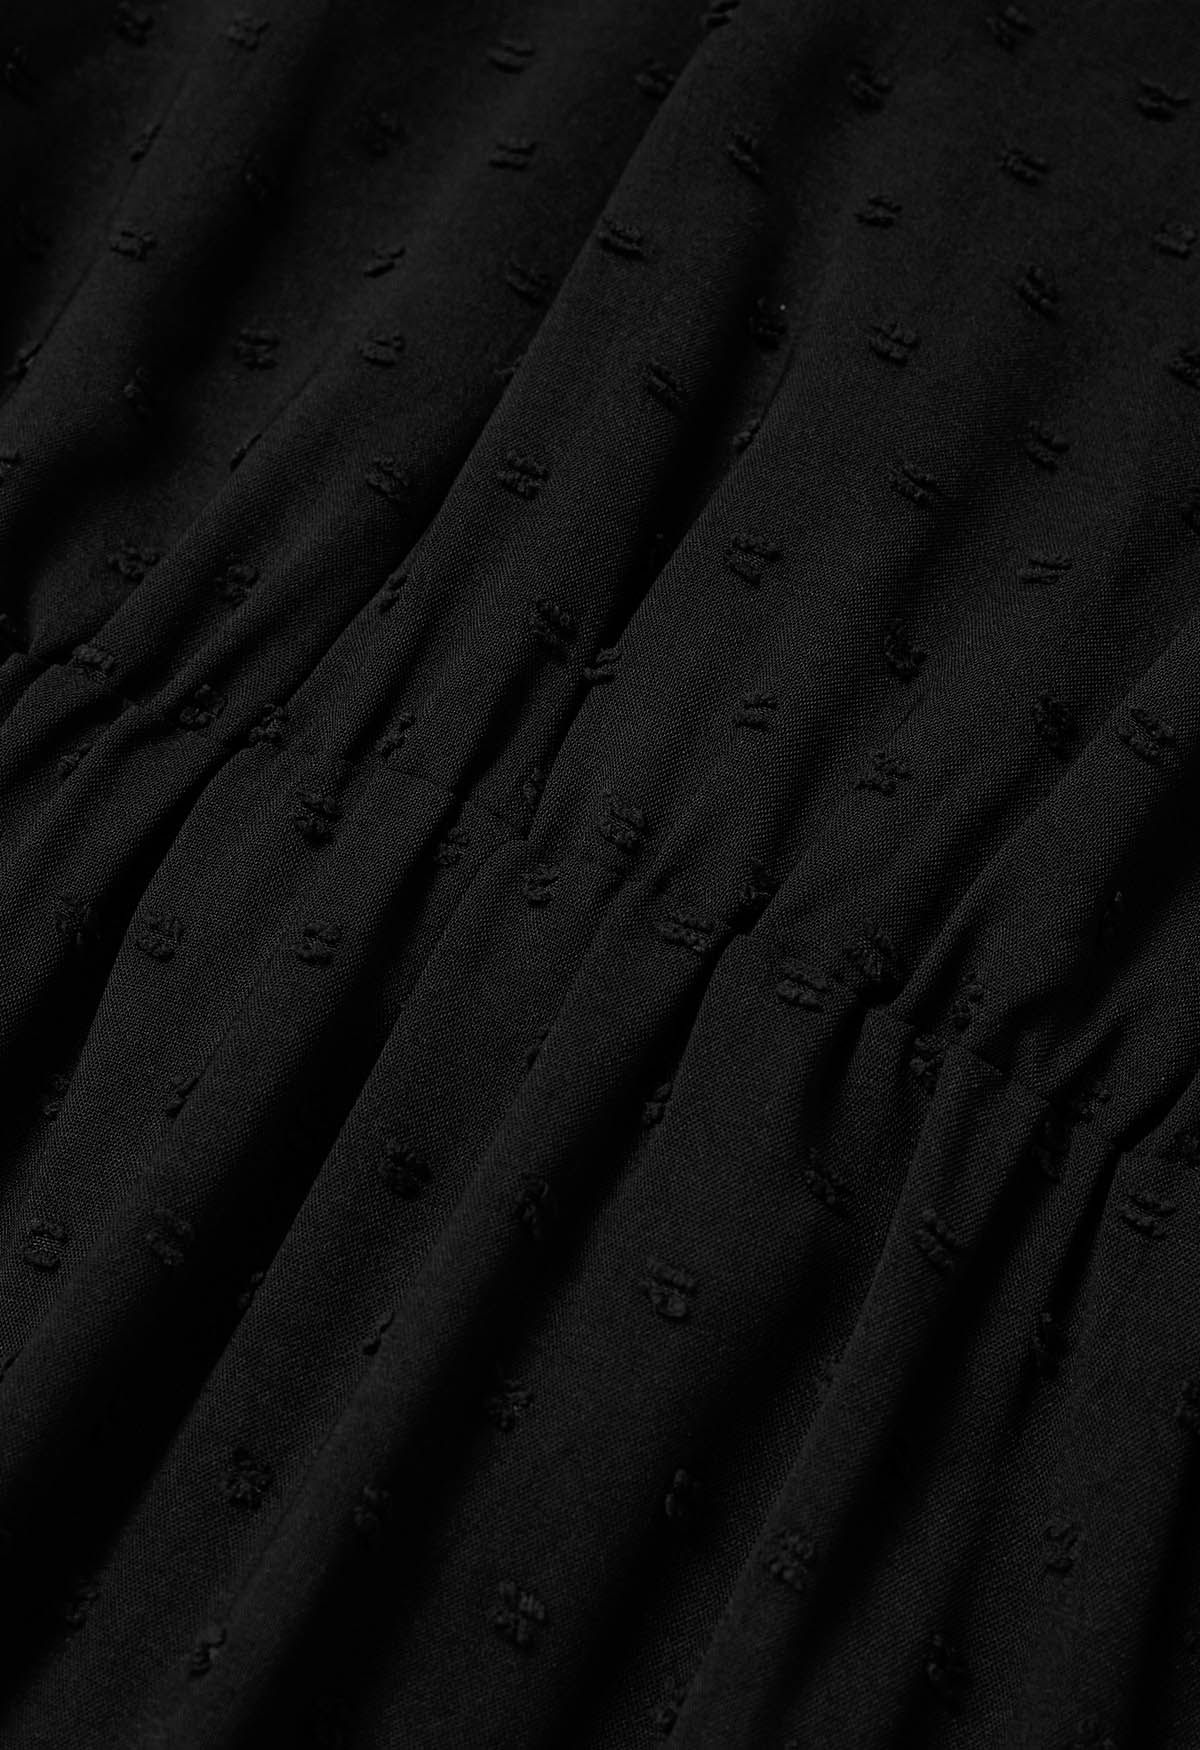 Flock Dot Jacquard Faux-Wrap Belted Dress in Black